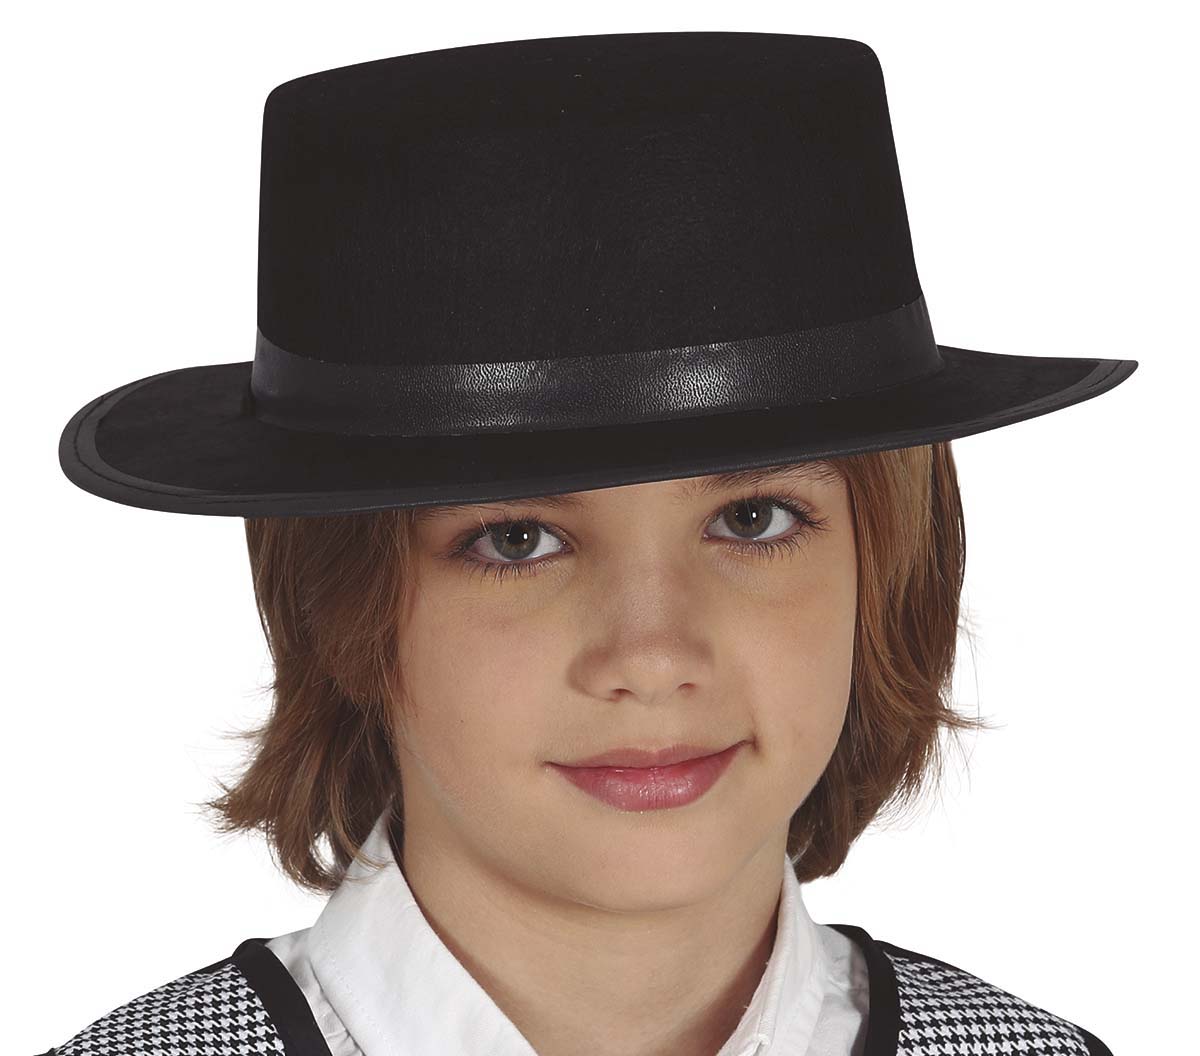 Child Black Hat